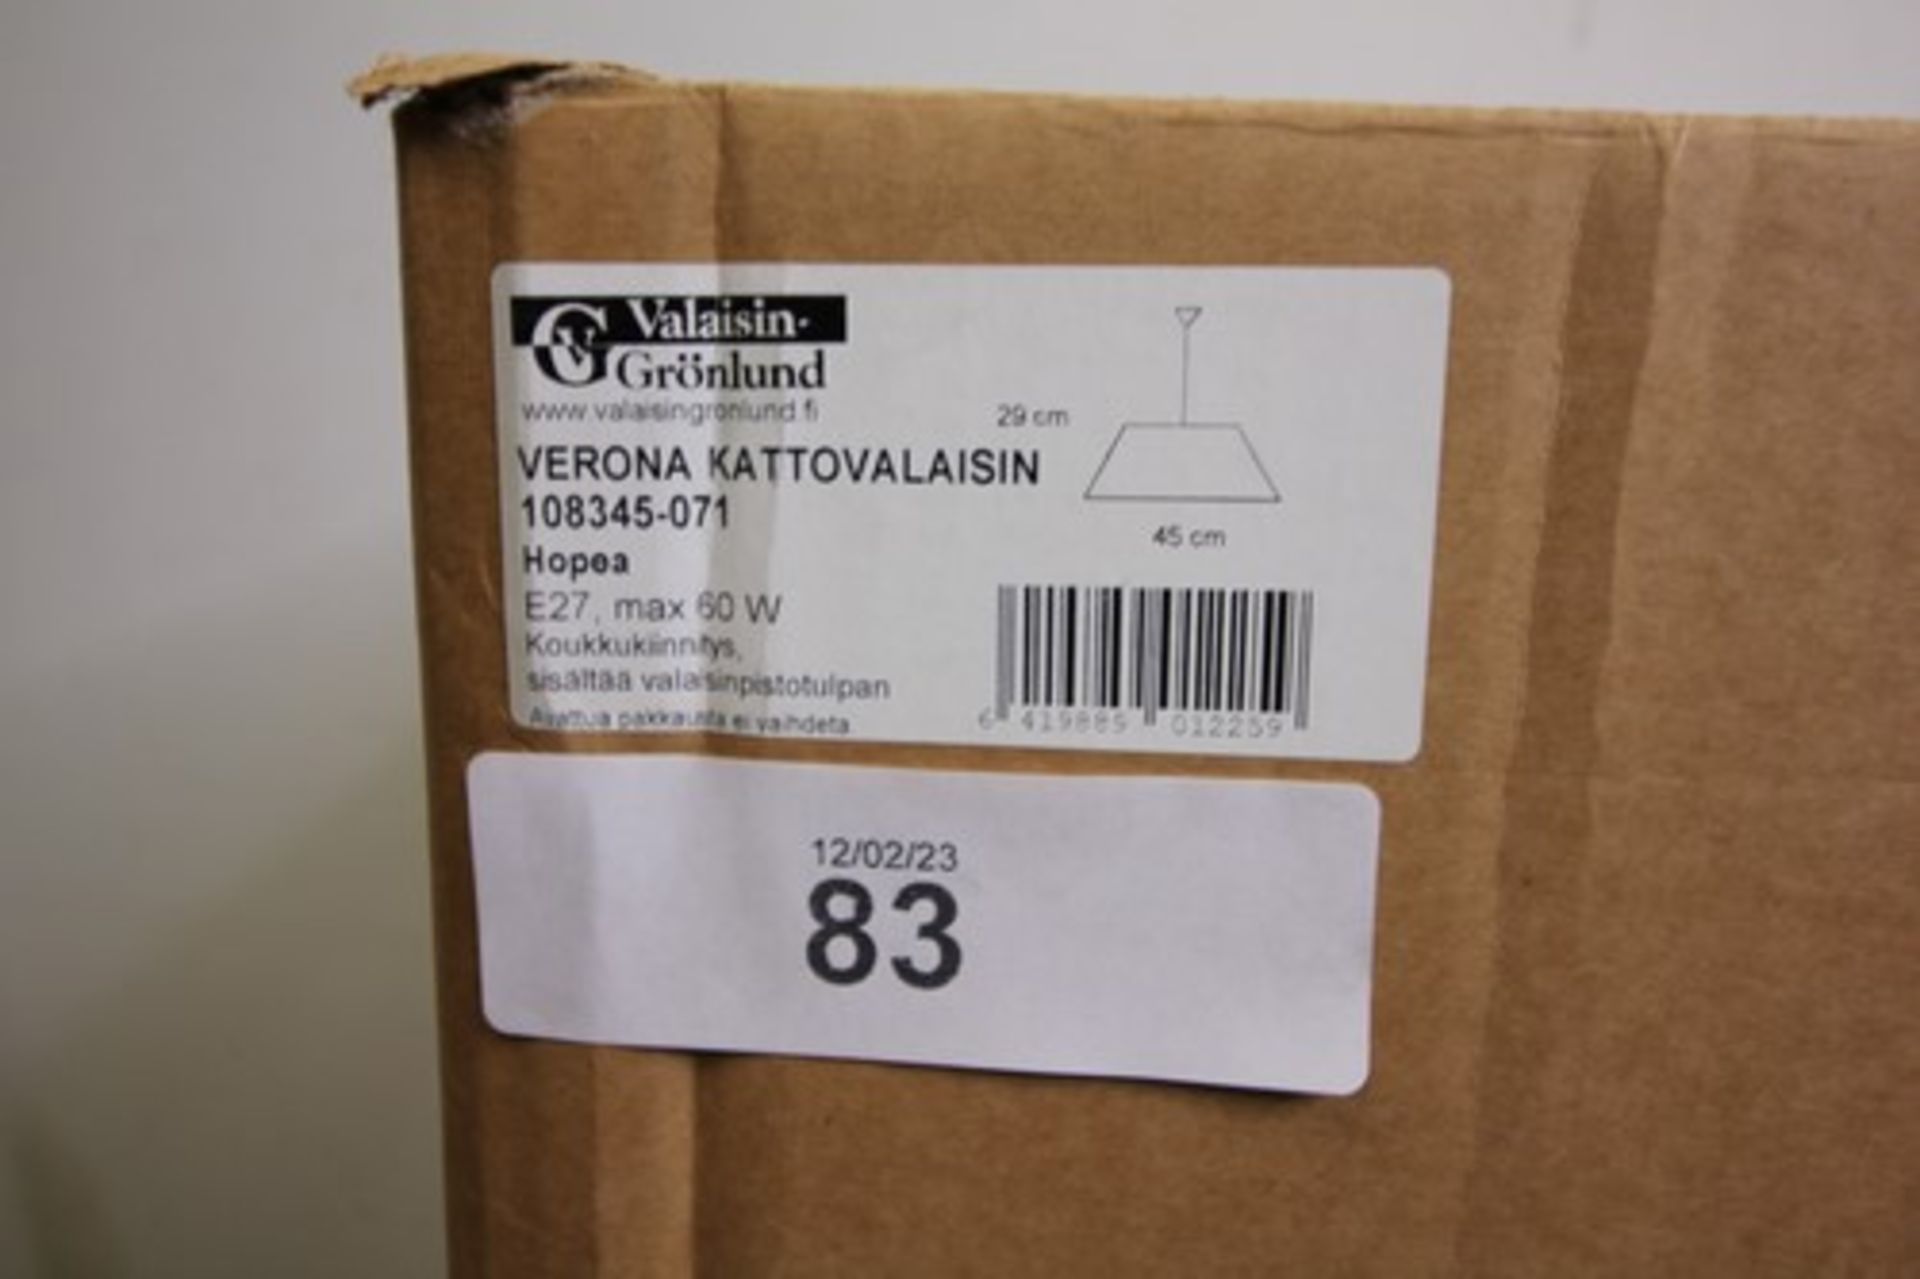 1 x Valaisin Grunland Mystique Kattovalaisin 37cm pendant light, model 109937-011 and 1 x Verona - Image 4 of 7